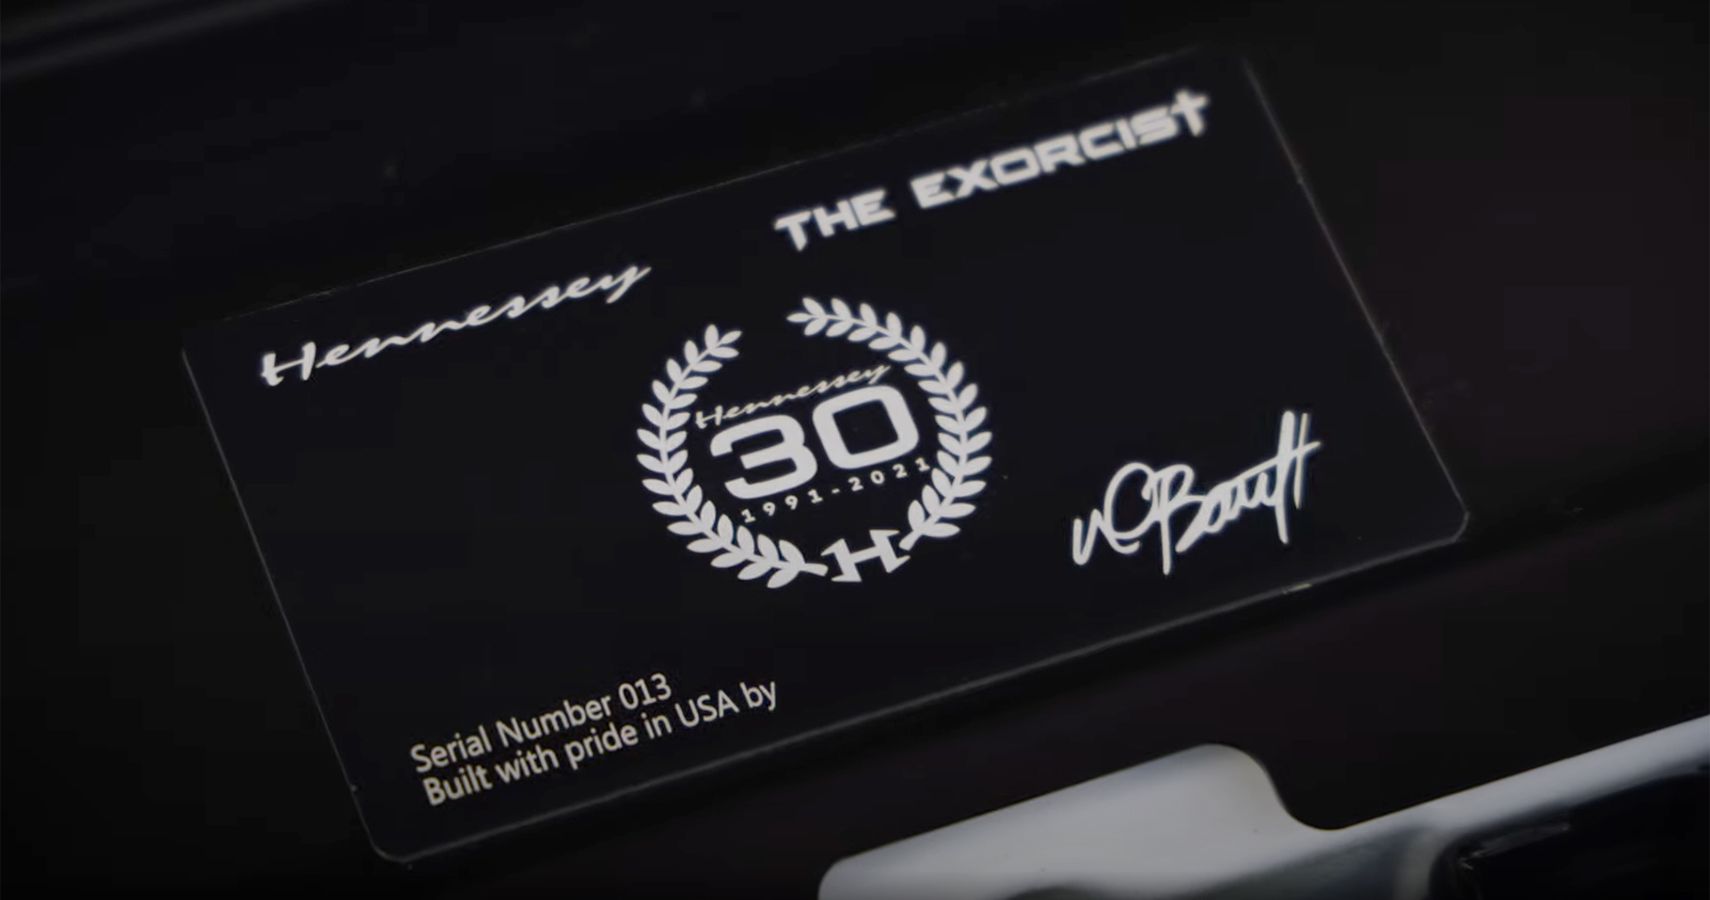 2022 Chevrolet Camaro ZL1 Exorcist engine bay series plaque